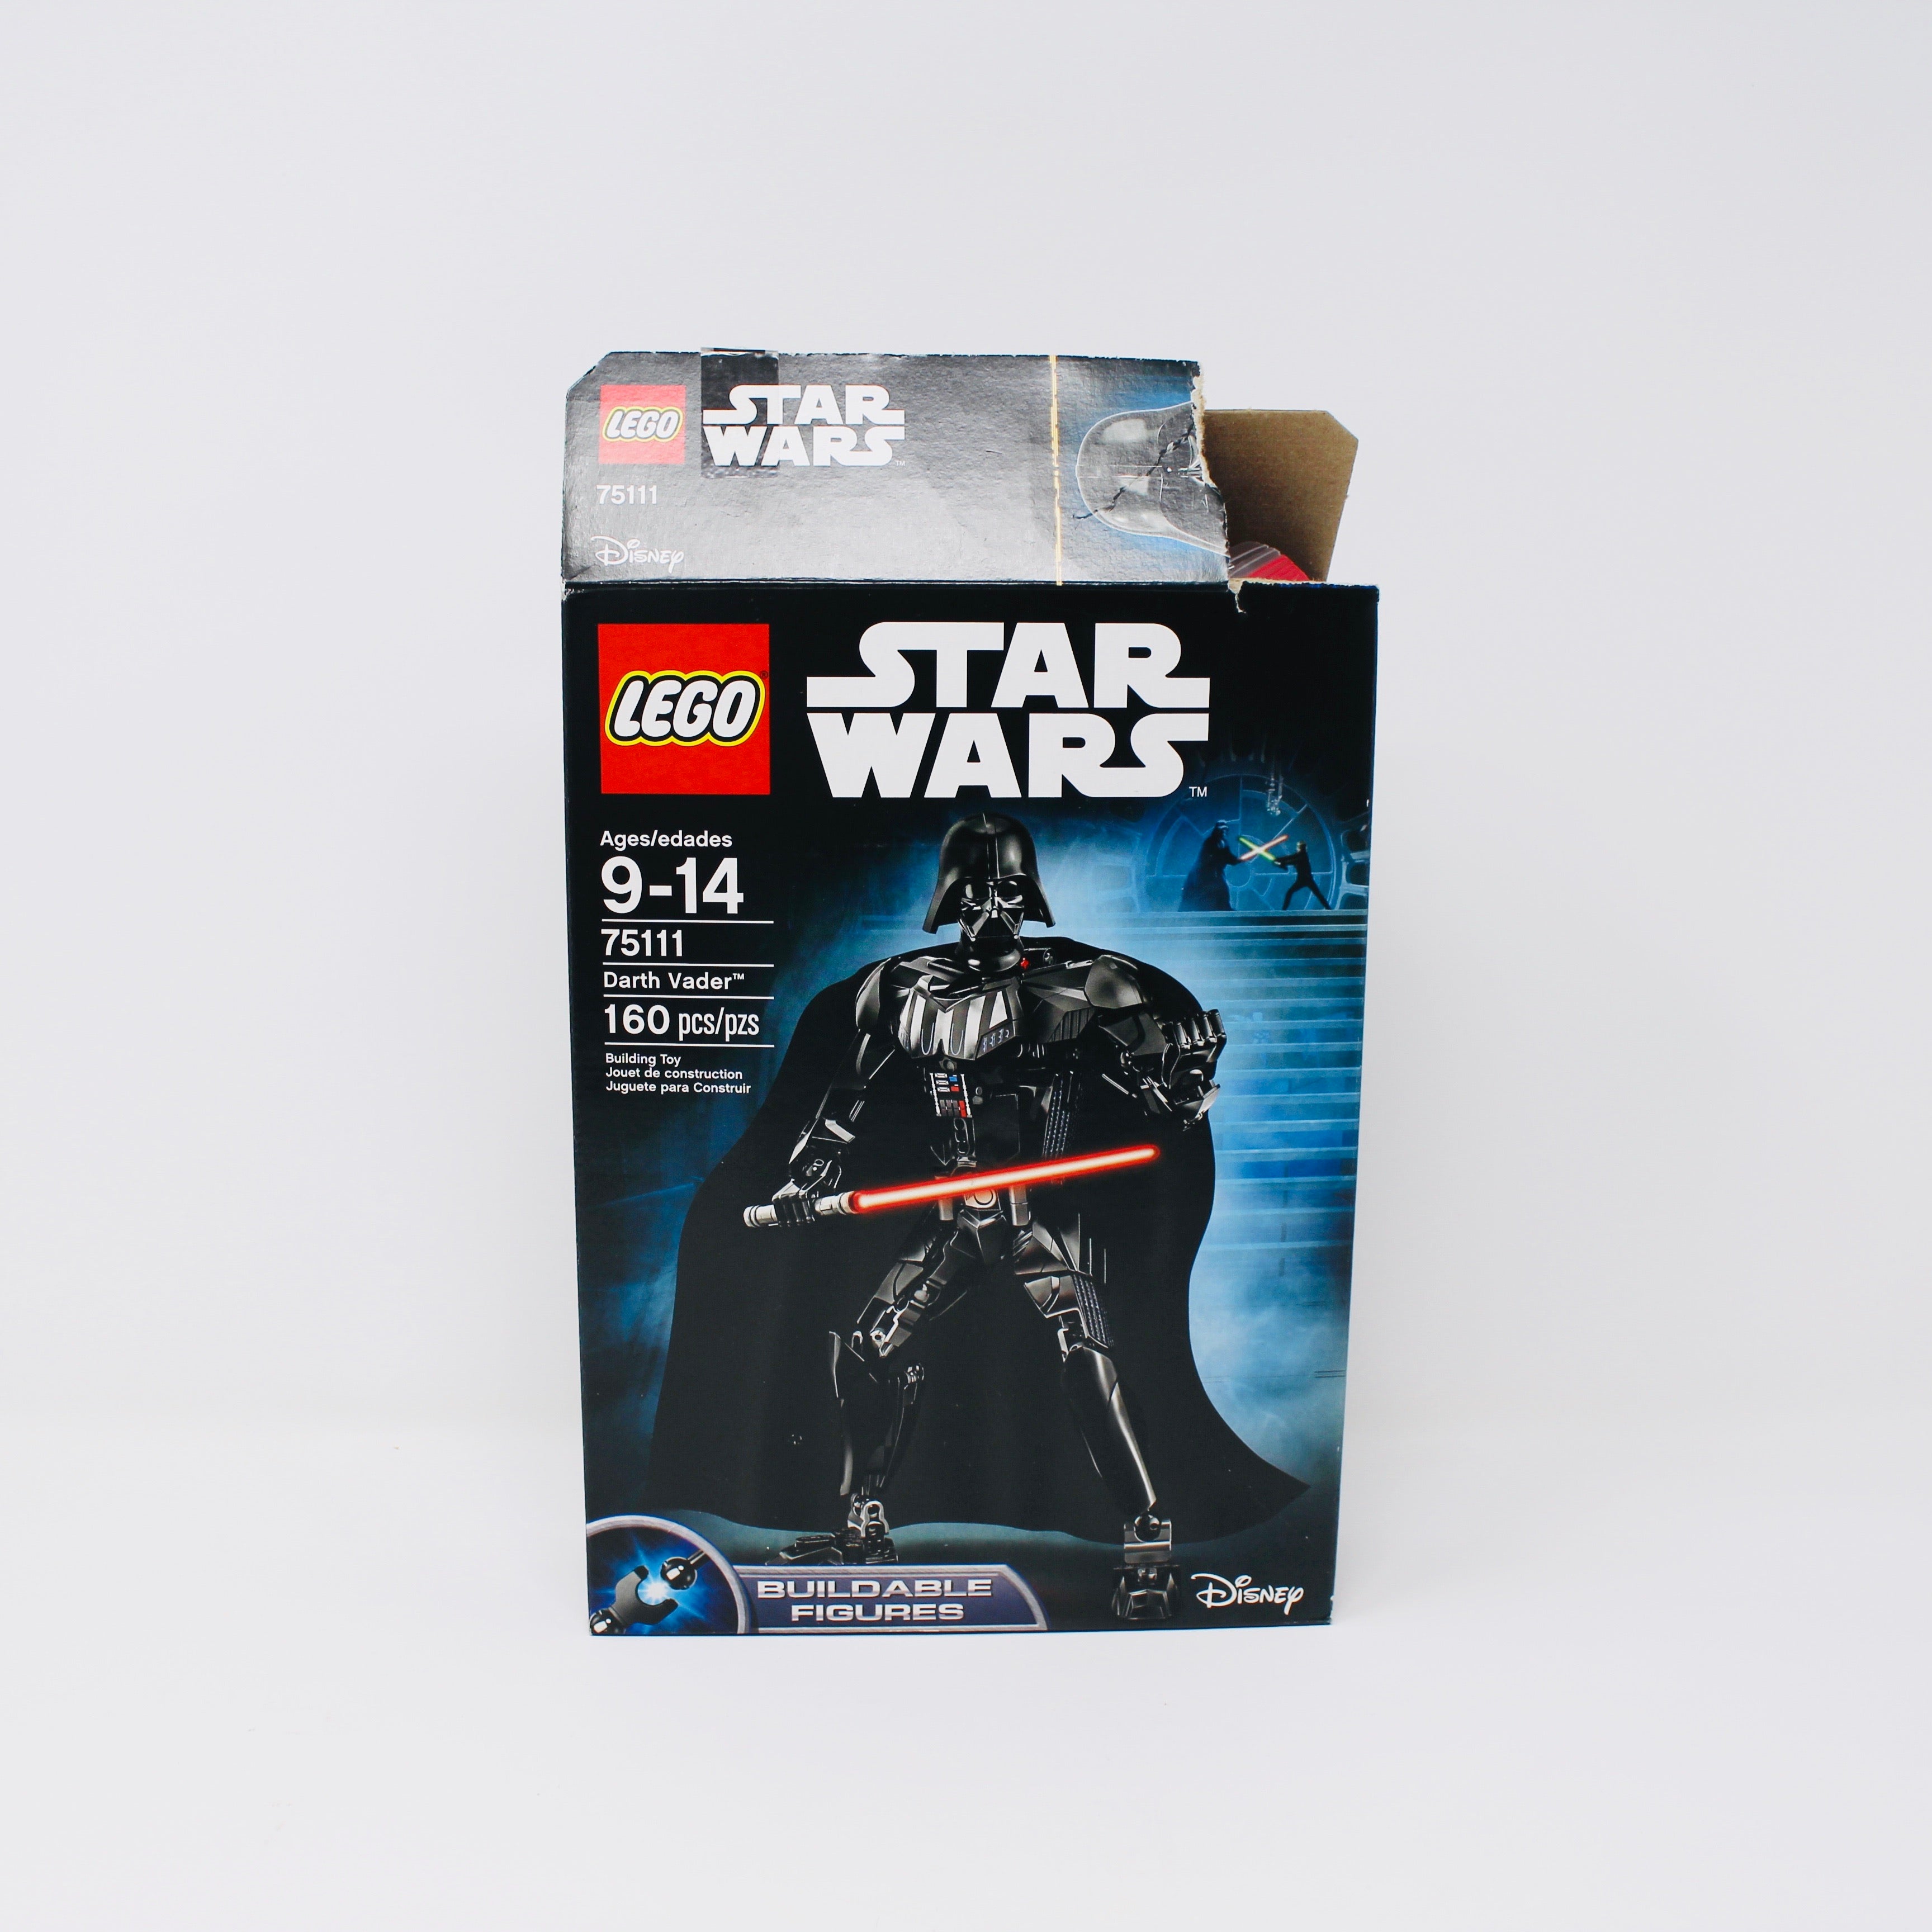 Used Set 75111 Star Wars Buildable Figures Darth Vader